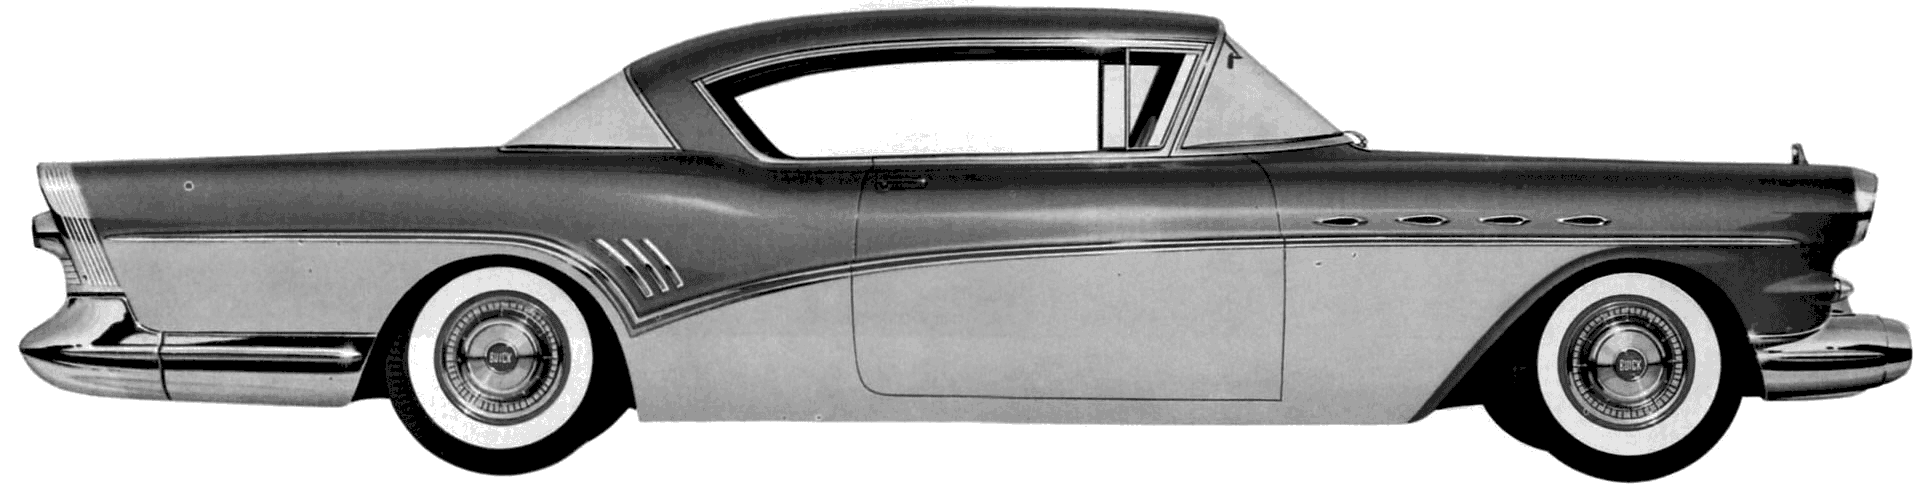 Karozza Buick Super Riviera Hardtop 1957 